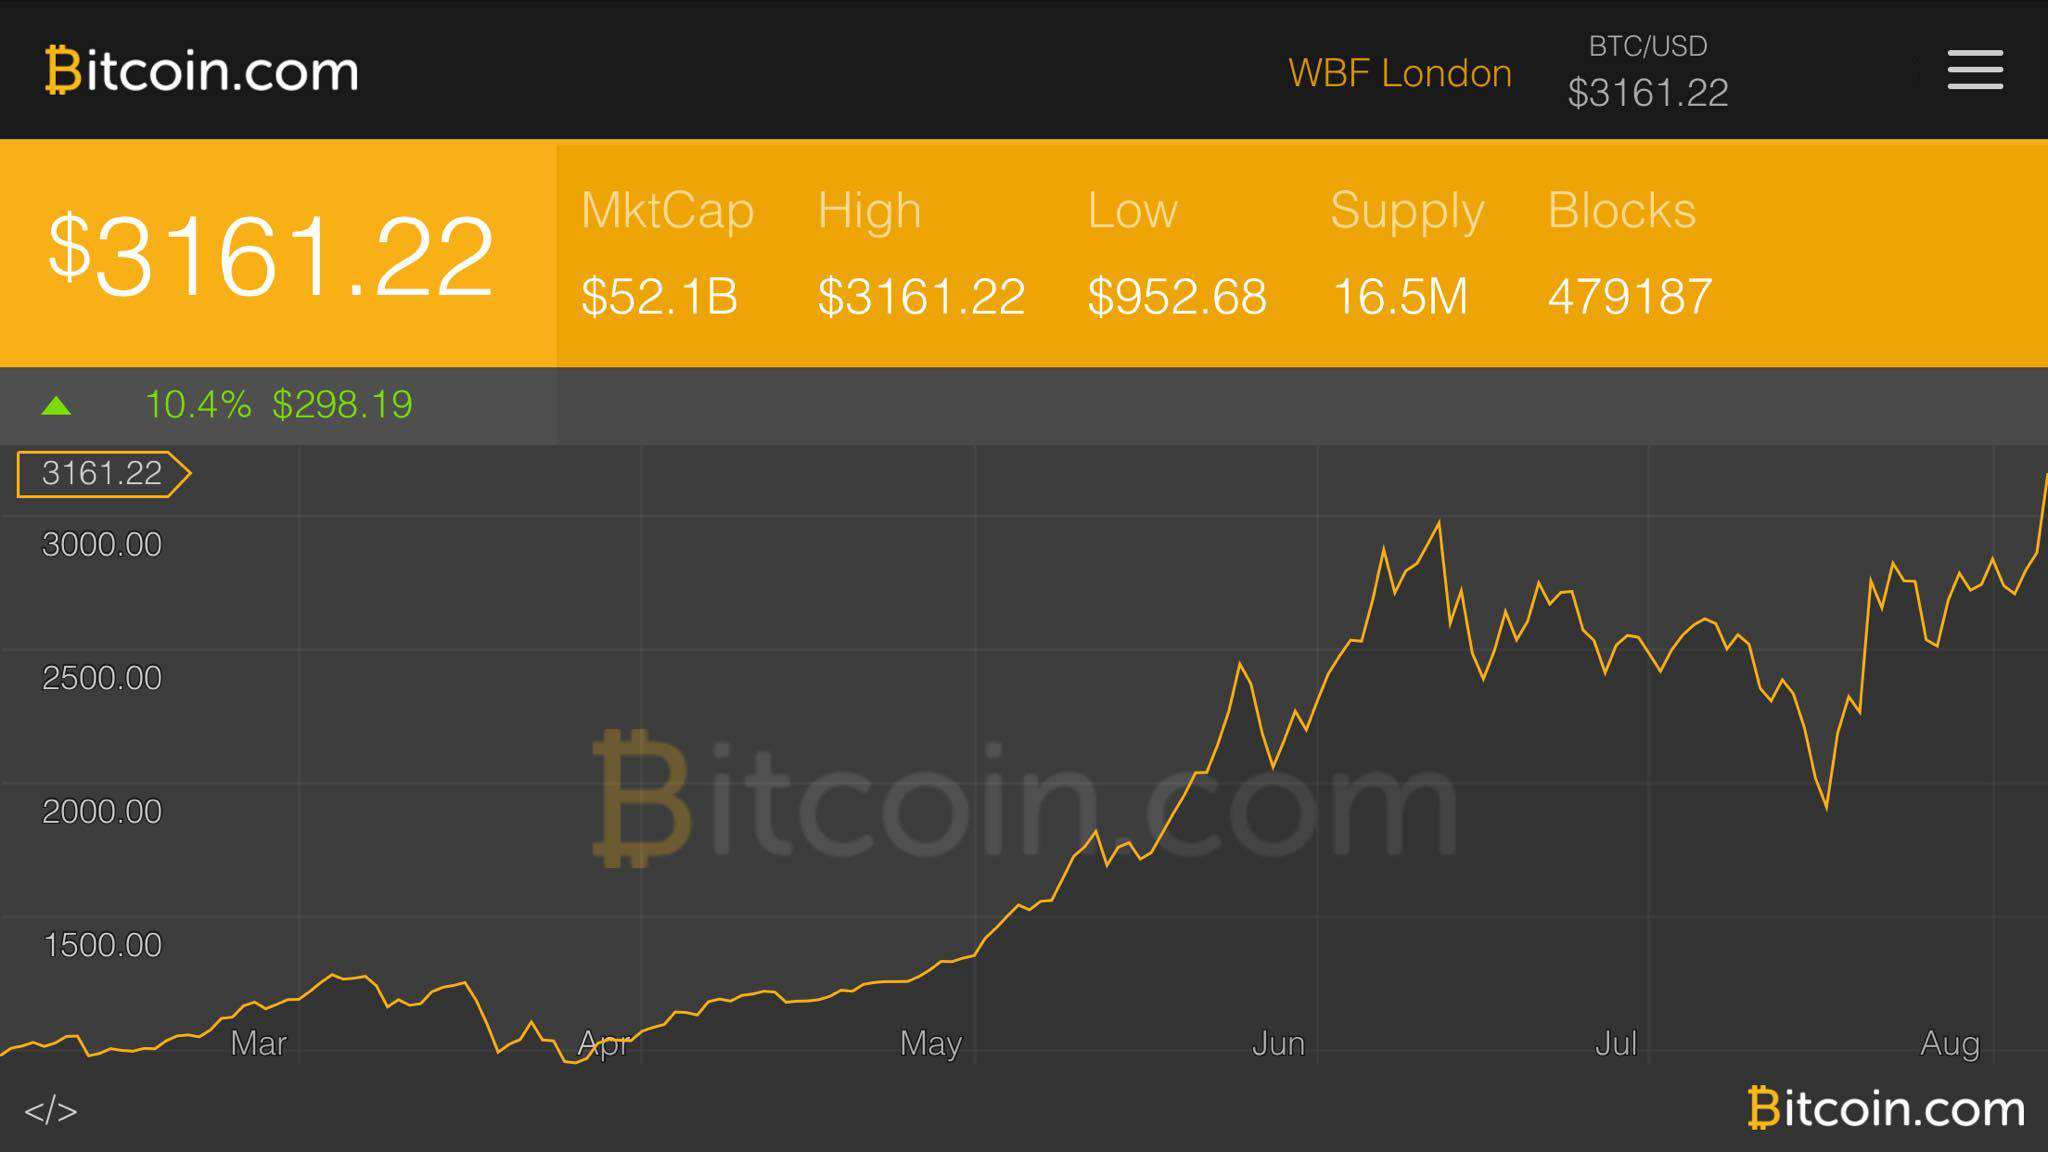 Bitcoin Surpasses Milestone Price of $3000 Across Global Exchanges